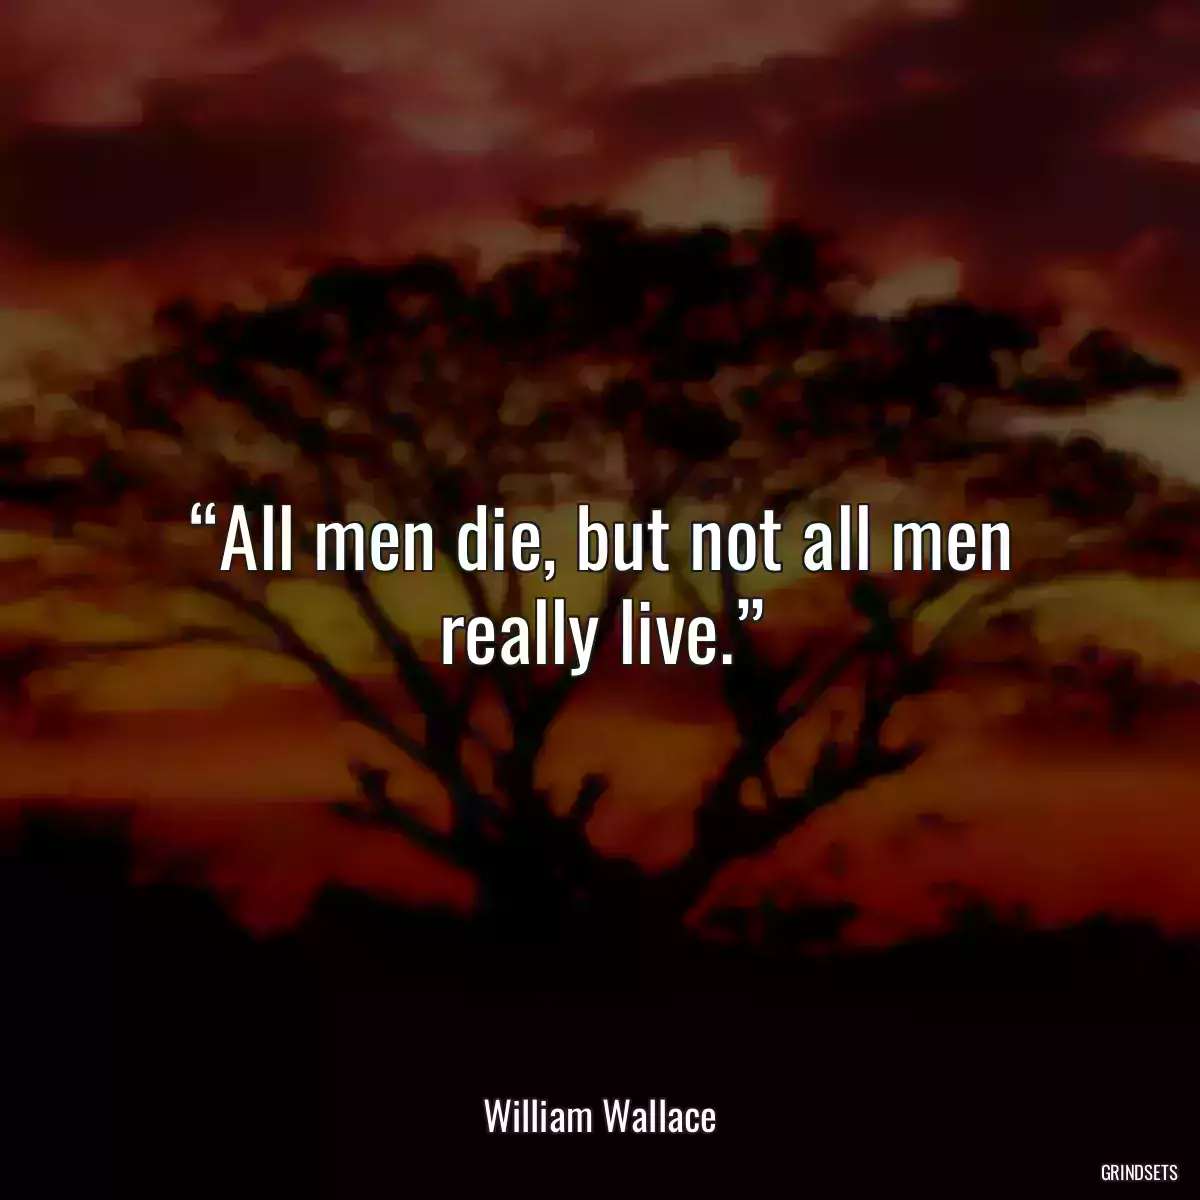 “All men die, but not all men really live.”